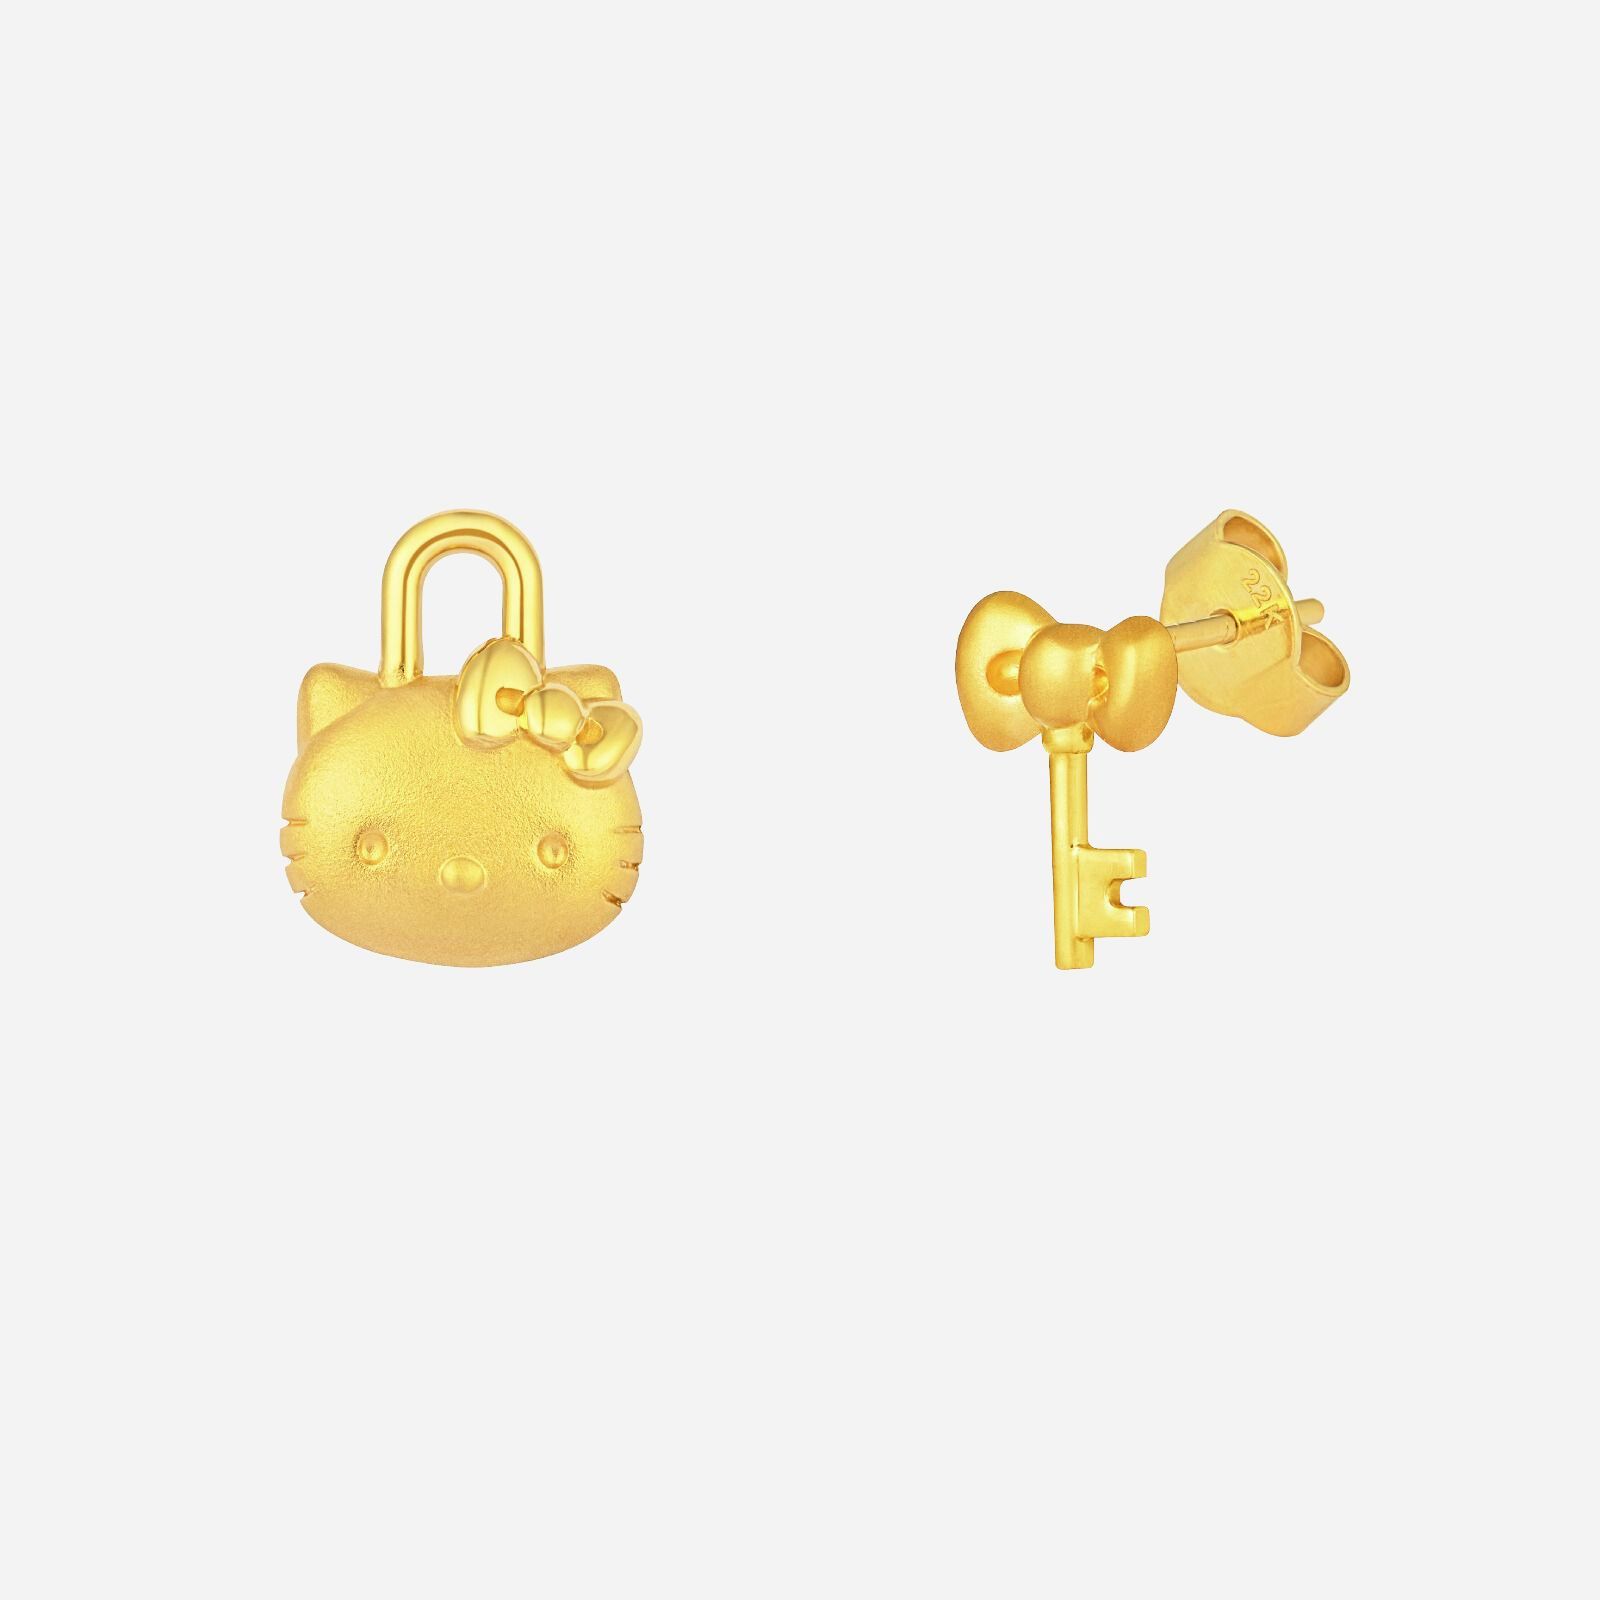 Poh Heng Hello Kitty Key To My Heart Earrings in 22K Yellow Gold